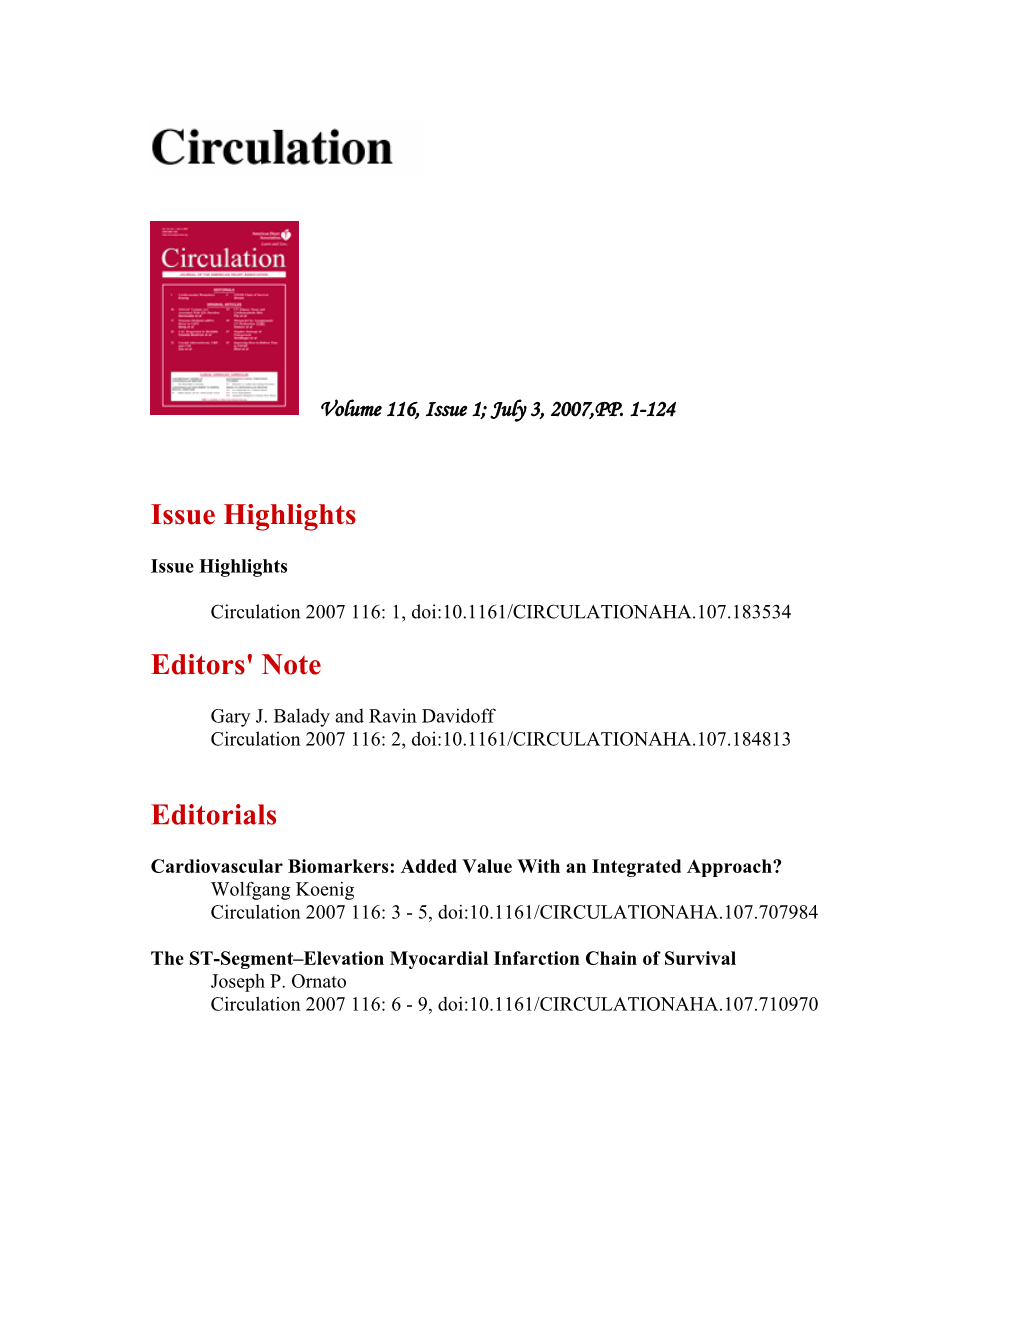 Issue Highlights Editors' Note Editorials